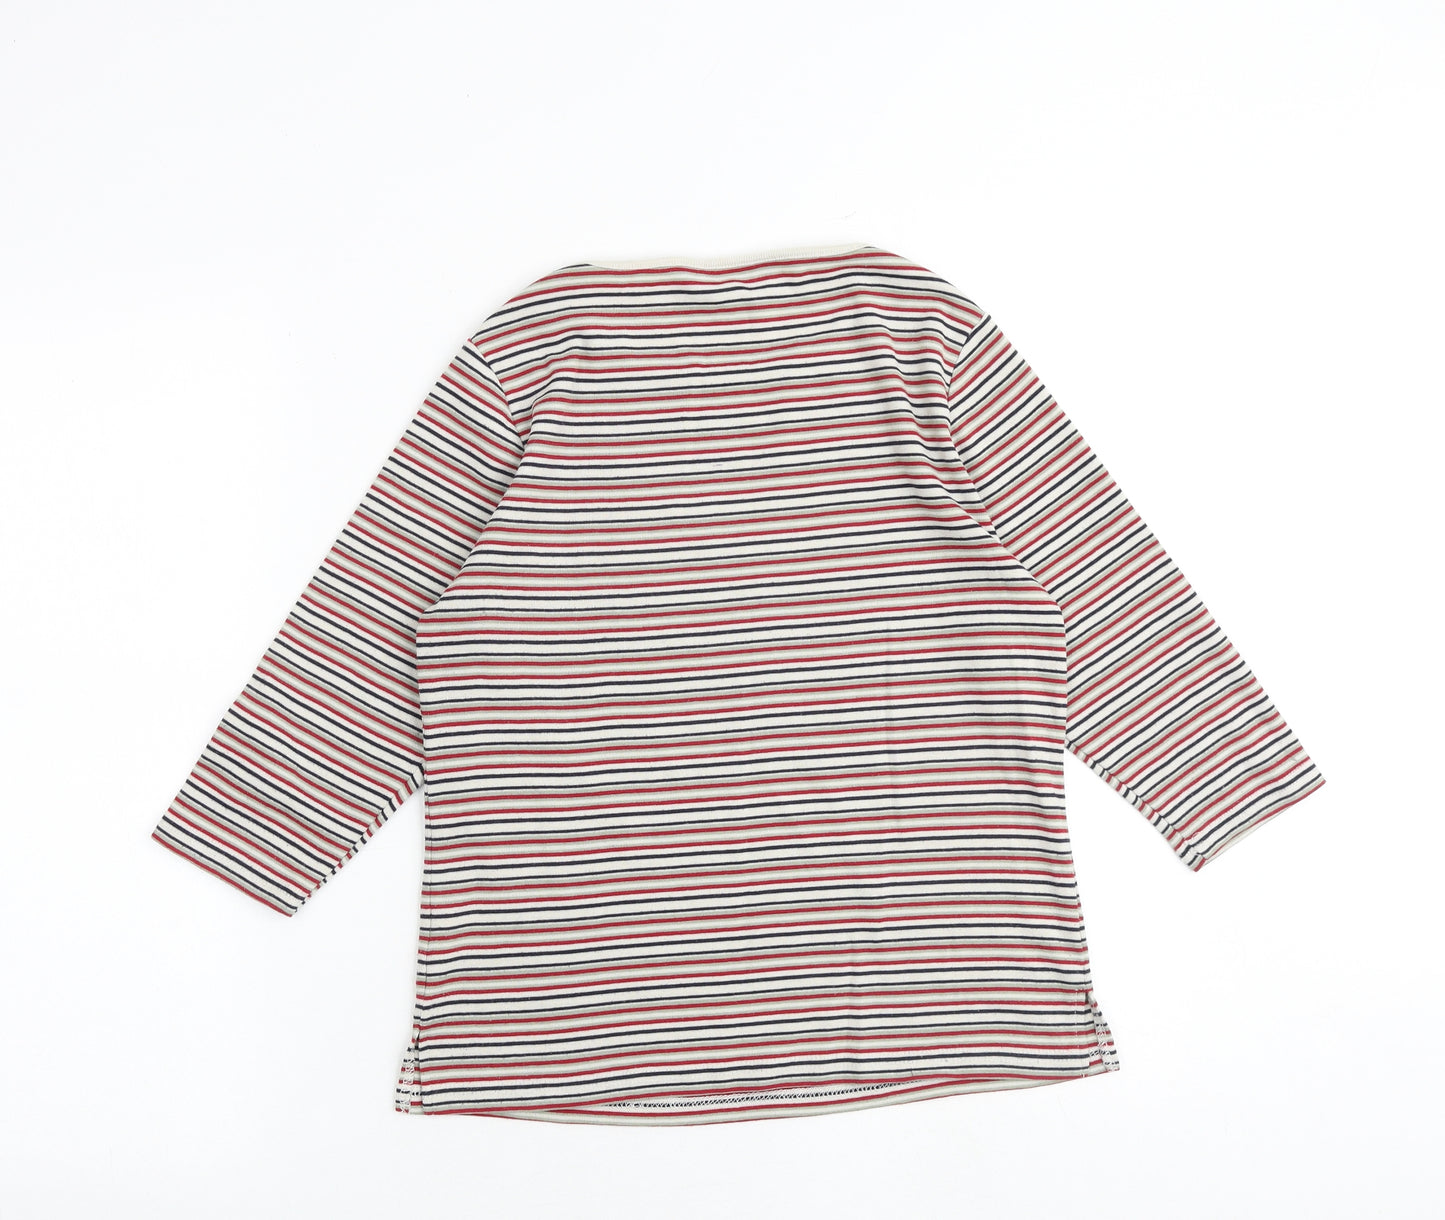 TIGI Womens Multicoloured Striped 100% Cotton Basic T-Shirt Size 10 Round Neck - Size 10-12